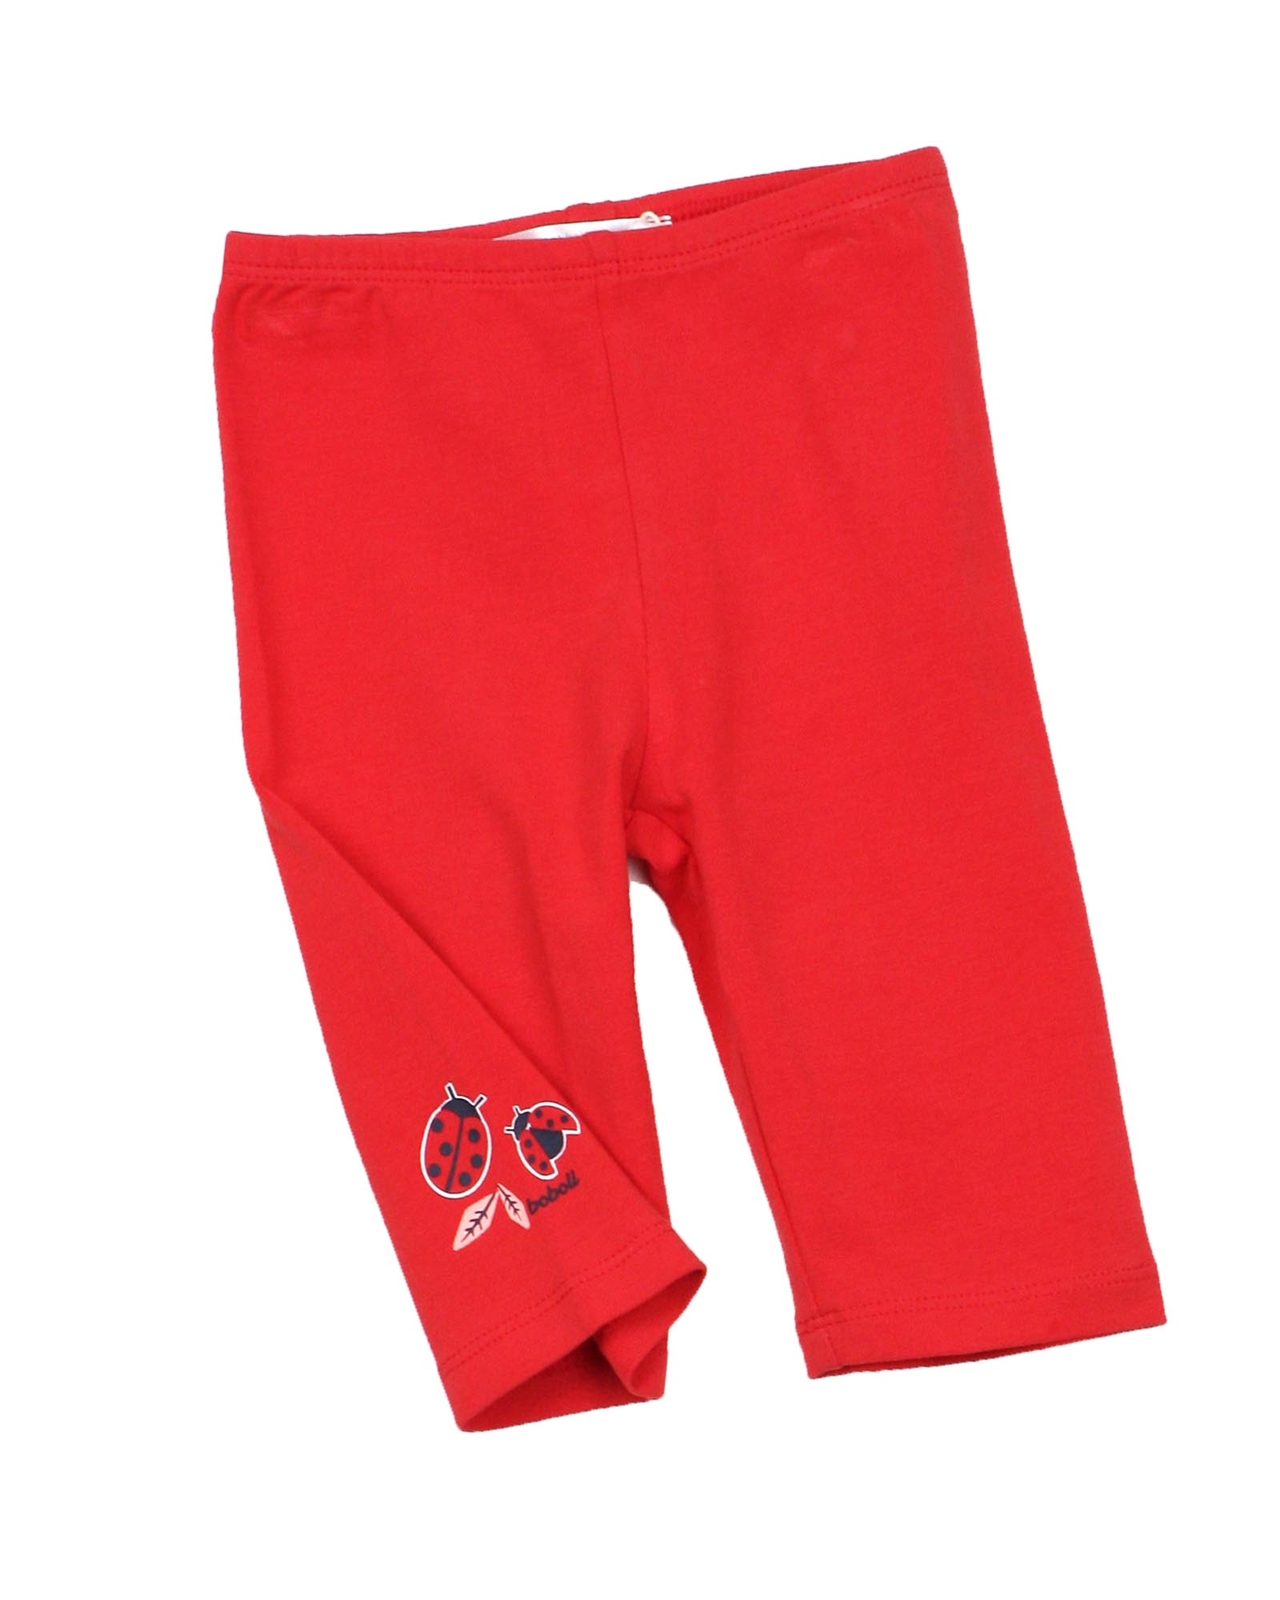 BOBOLI Baby Girls Basic Capri Leggings in Red, Sizes 12M-3